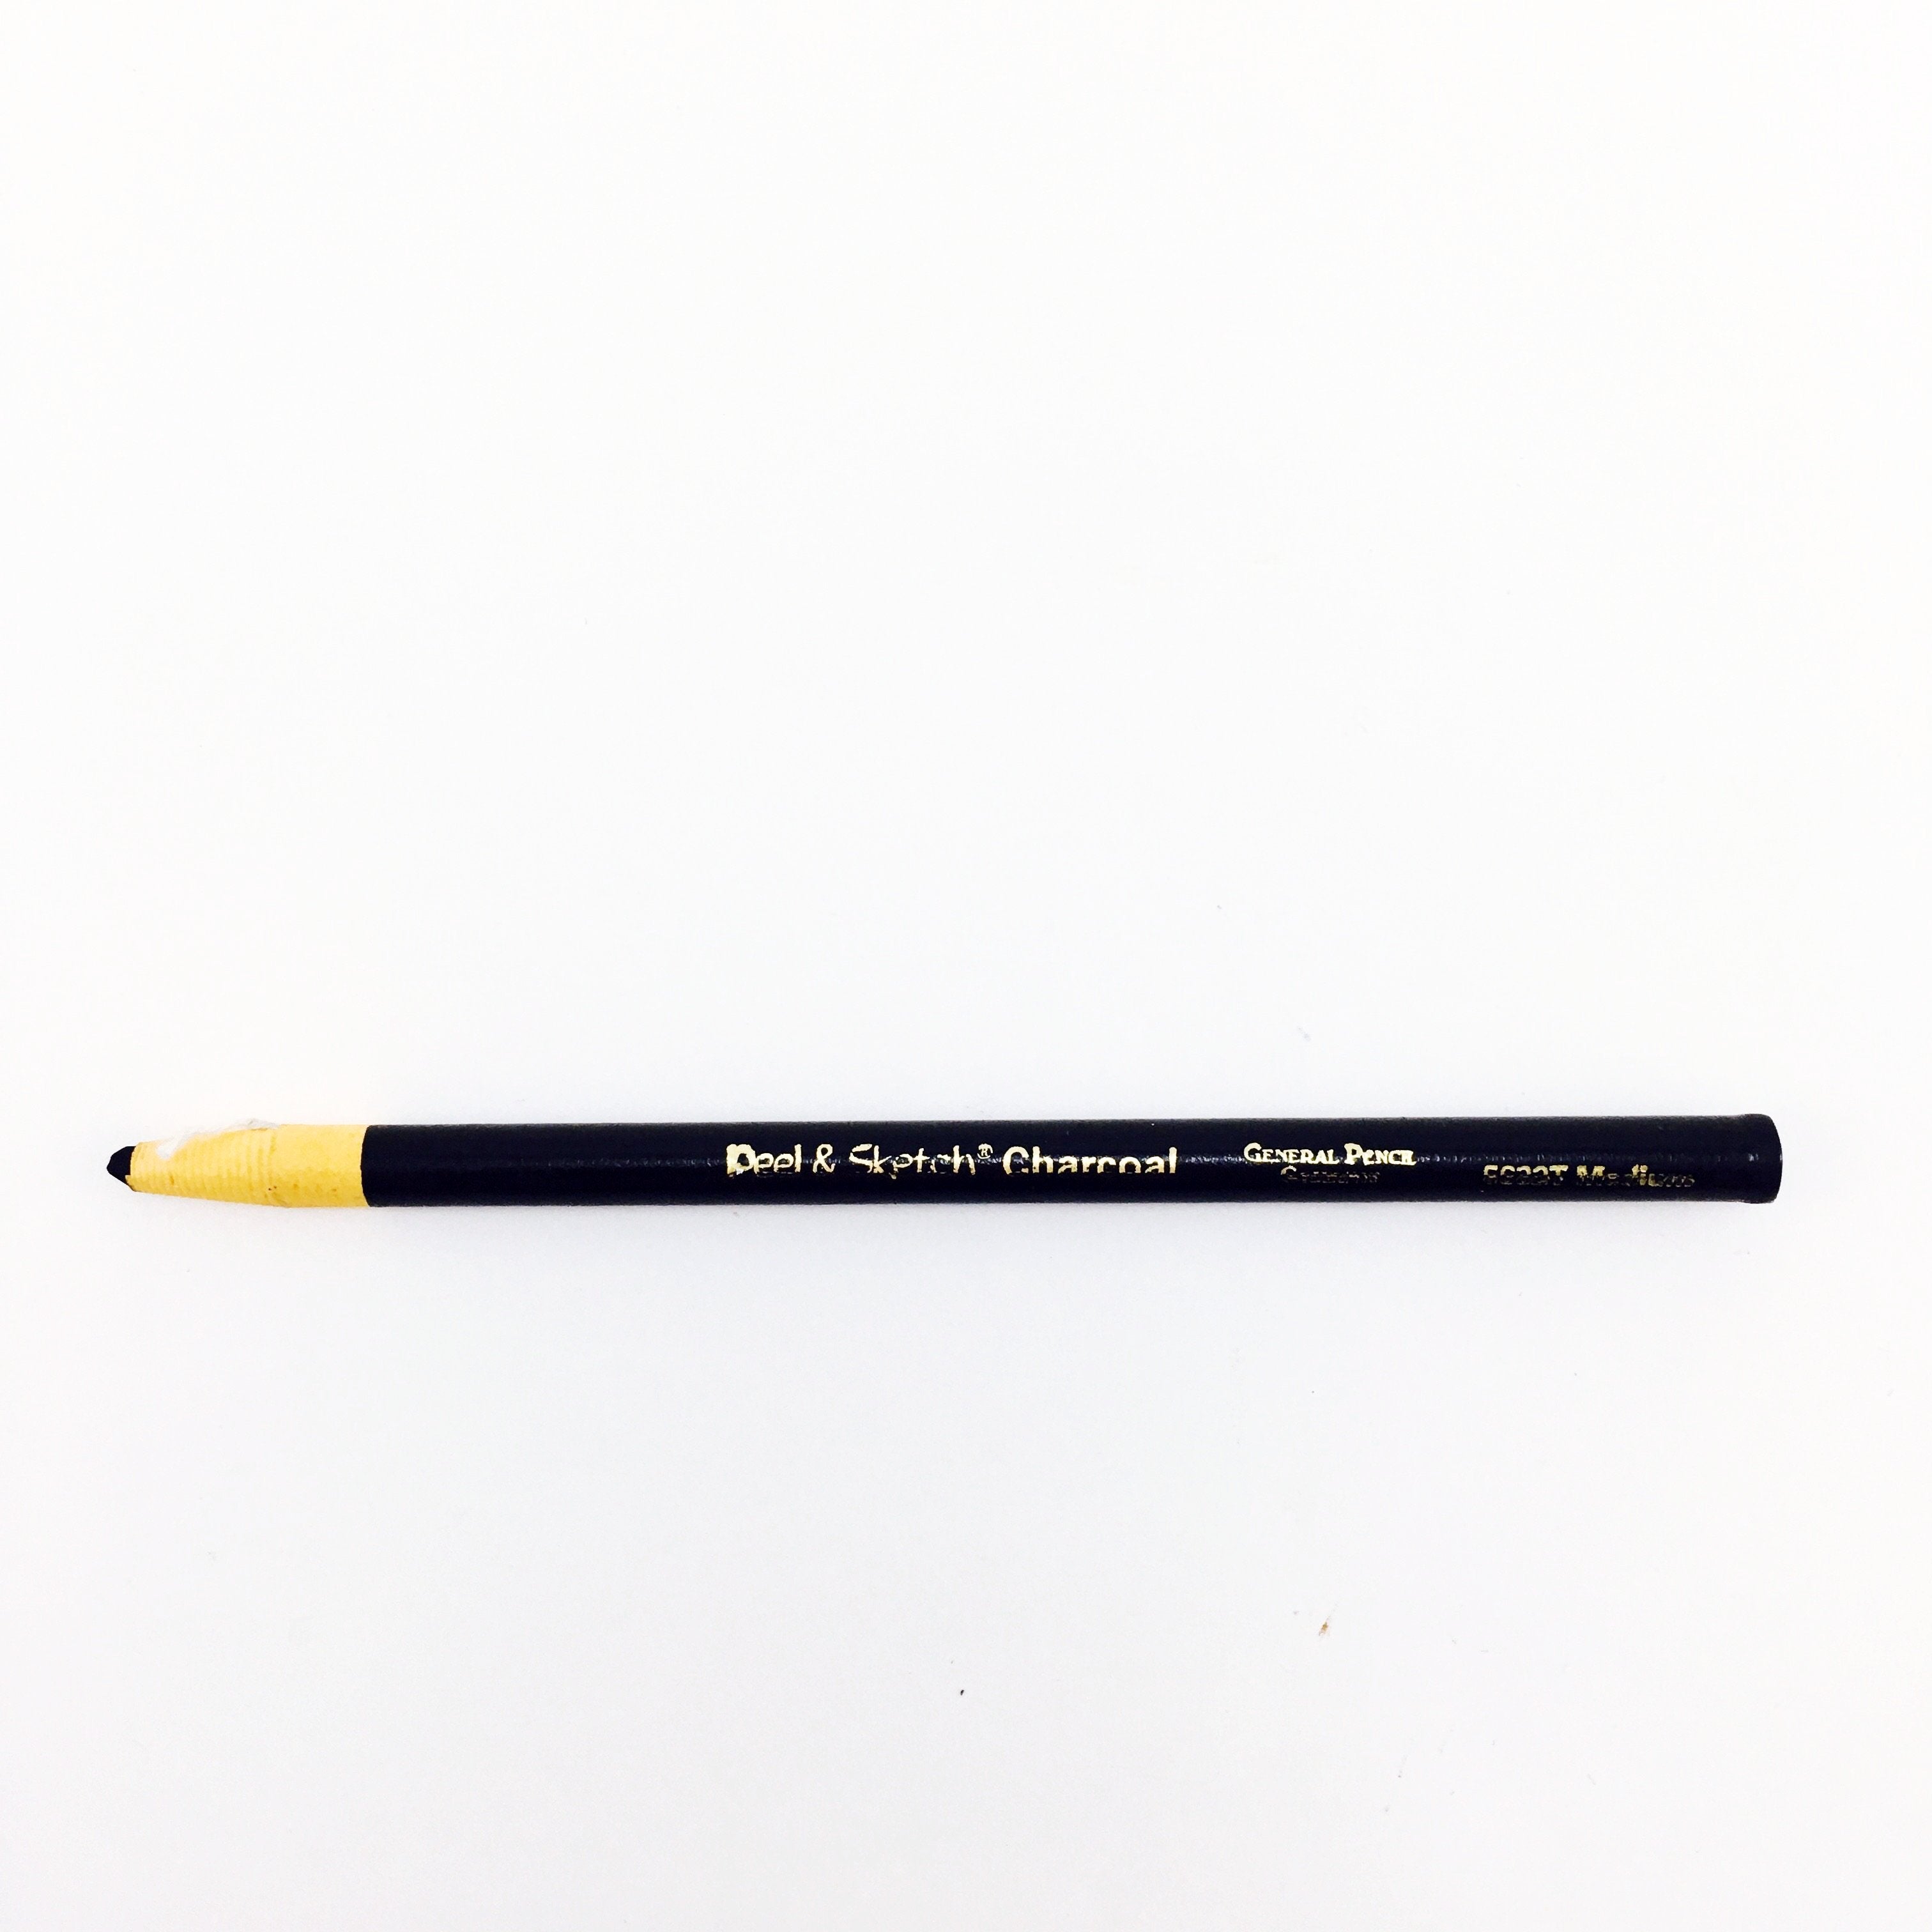 K Kwokker 75pcs, Pastel Pencils, Charcoal Pencils for Drawing